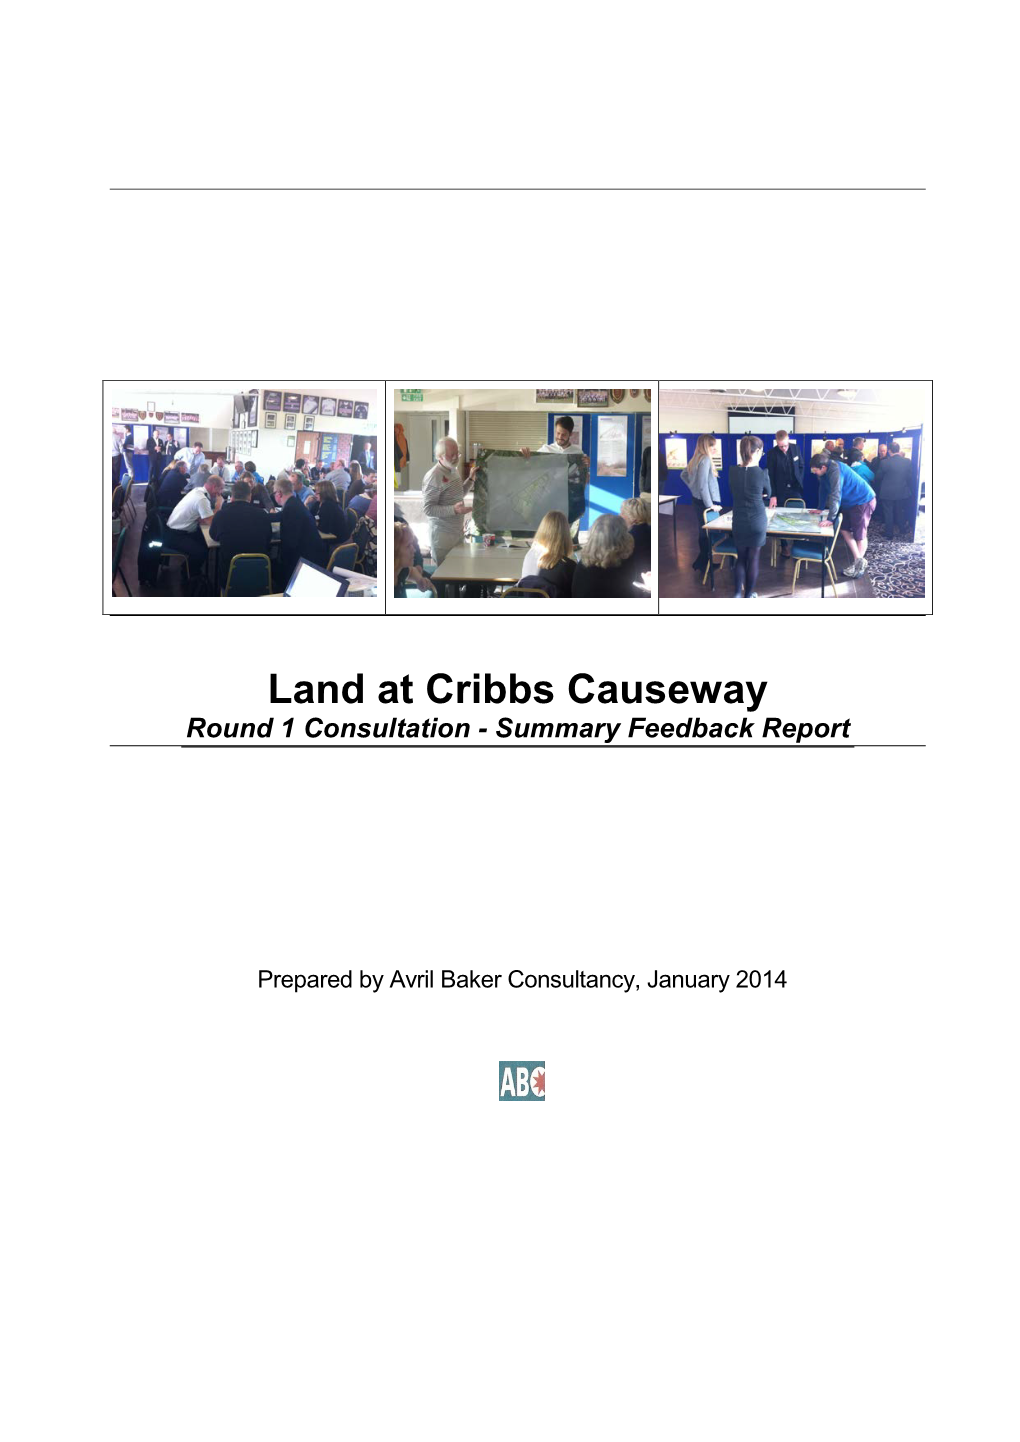 Land at Cribbs Causeway Round 1 Consultation - Summary Feedback Report